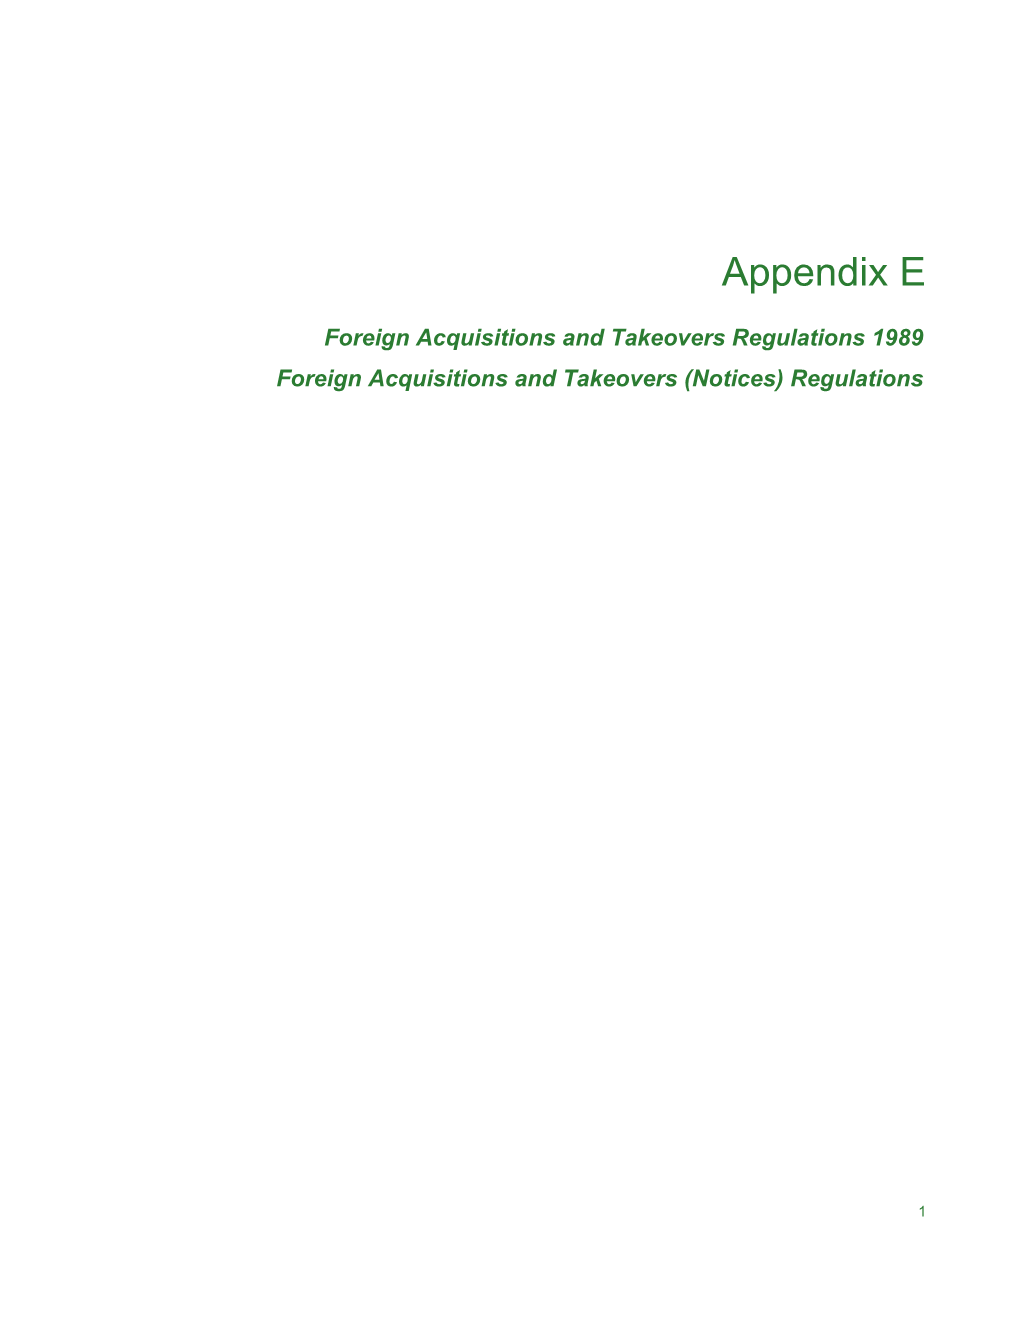 Appendix E - FIRB 2007-08 Annual Reprt